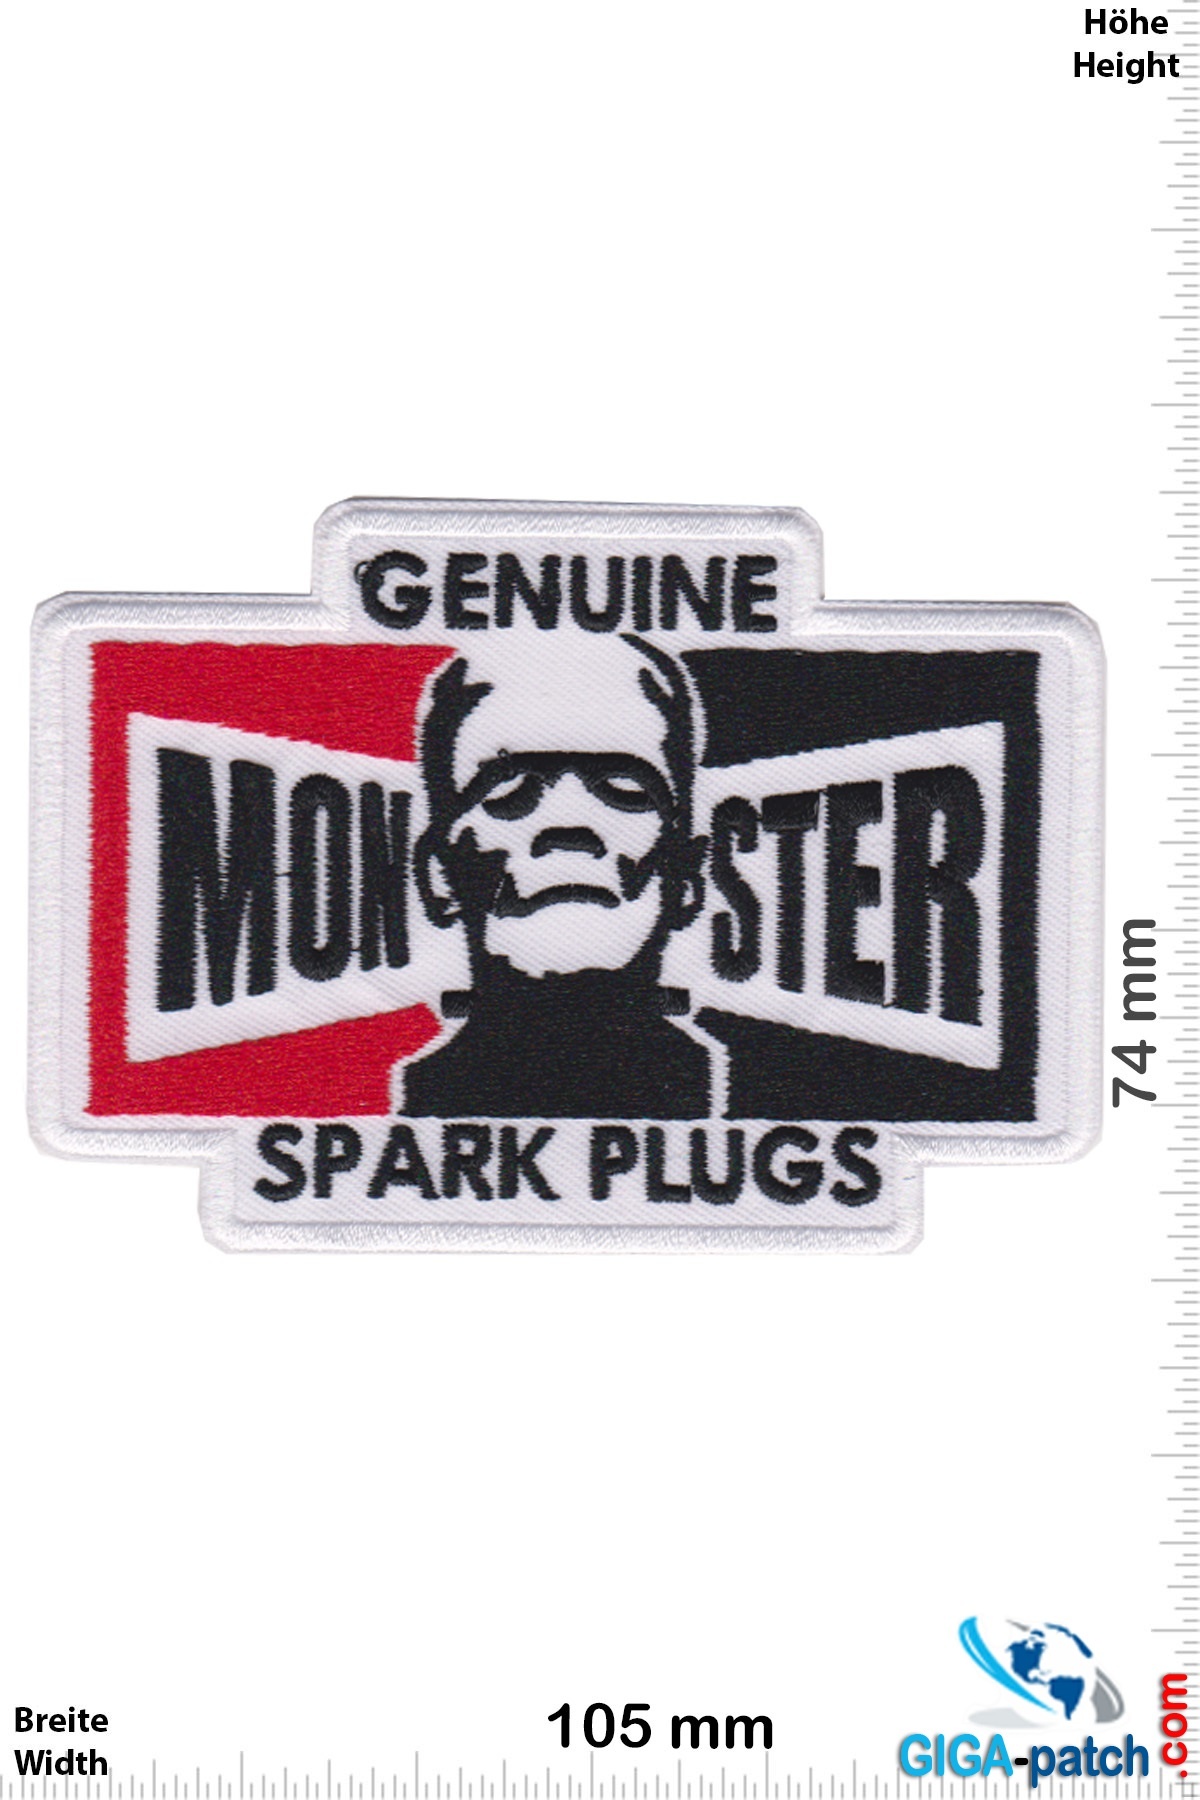 Genuine Monster Spark Plugs